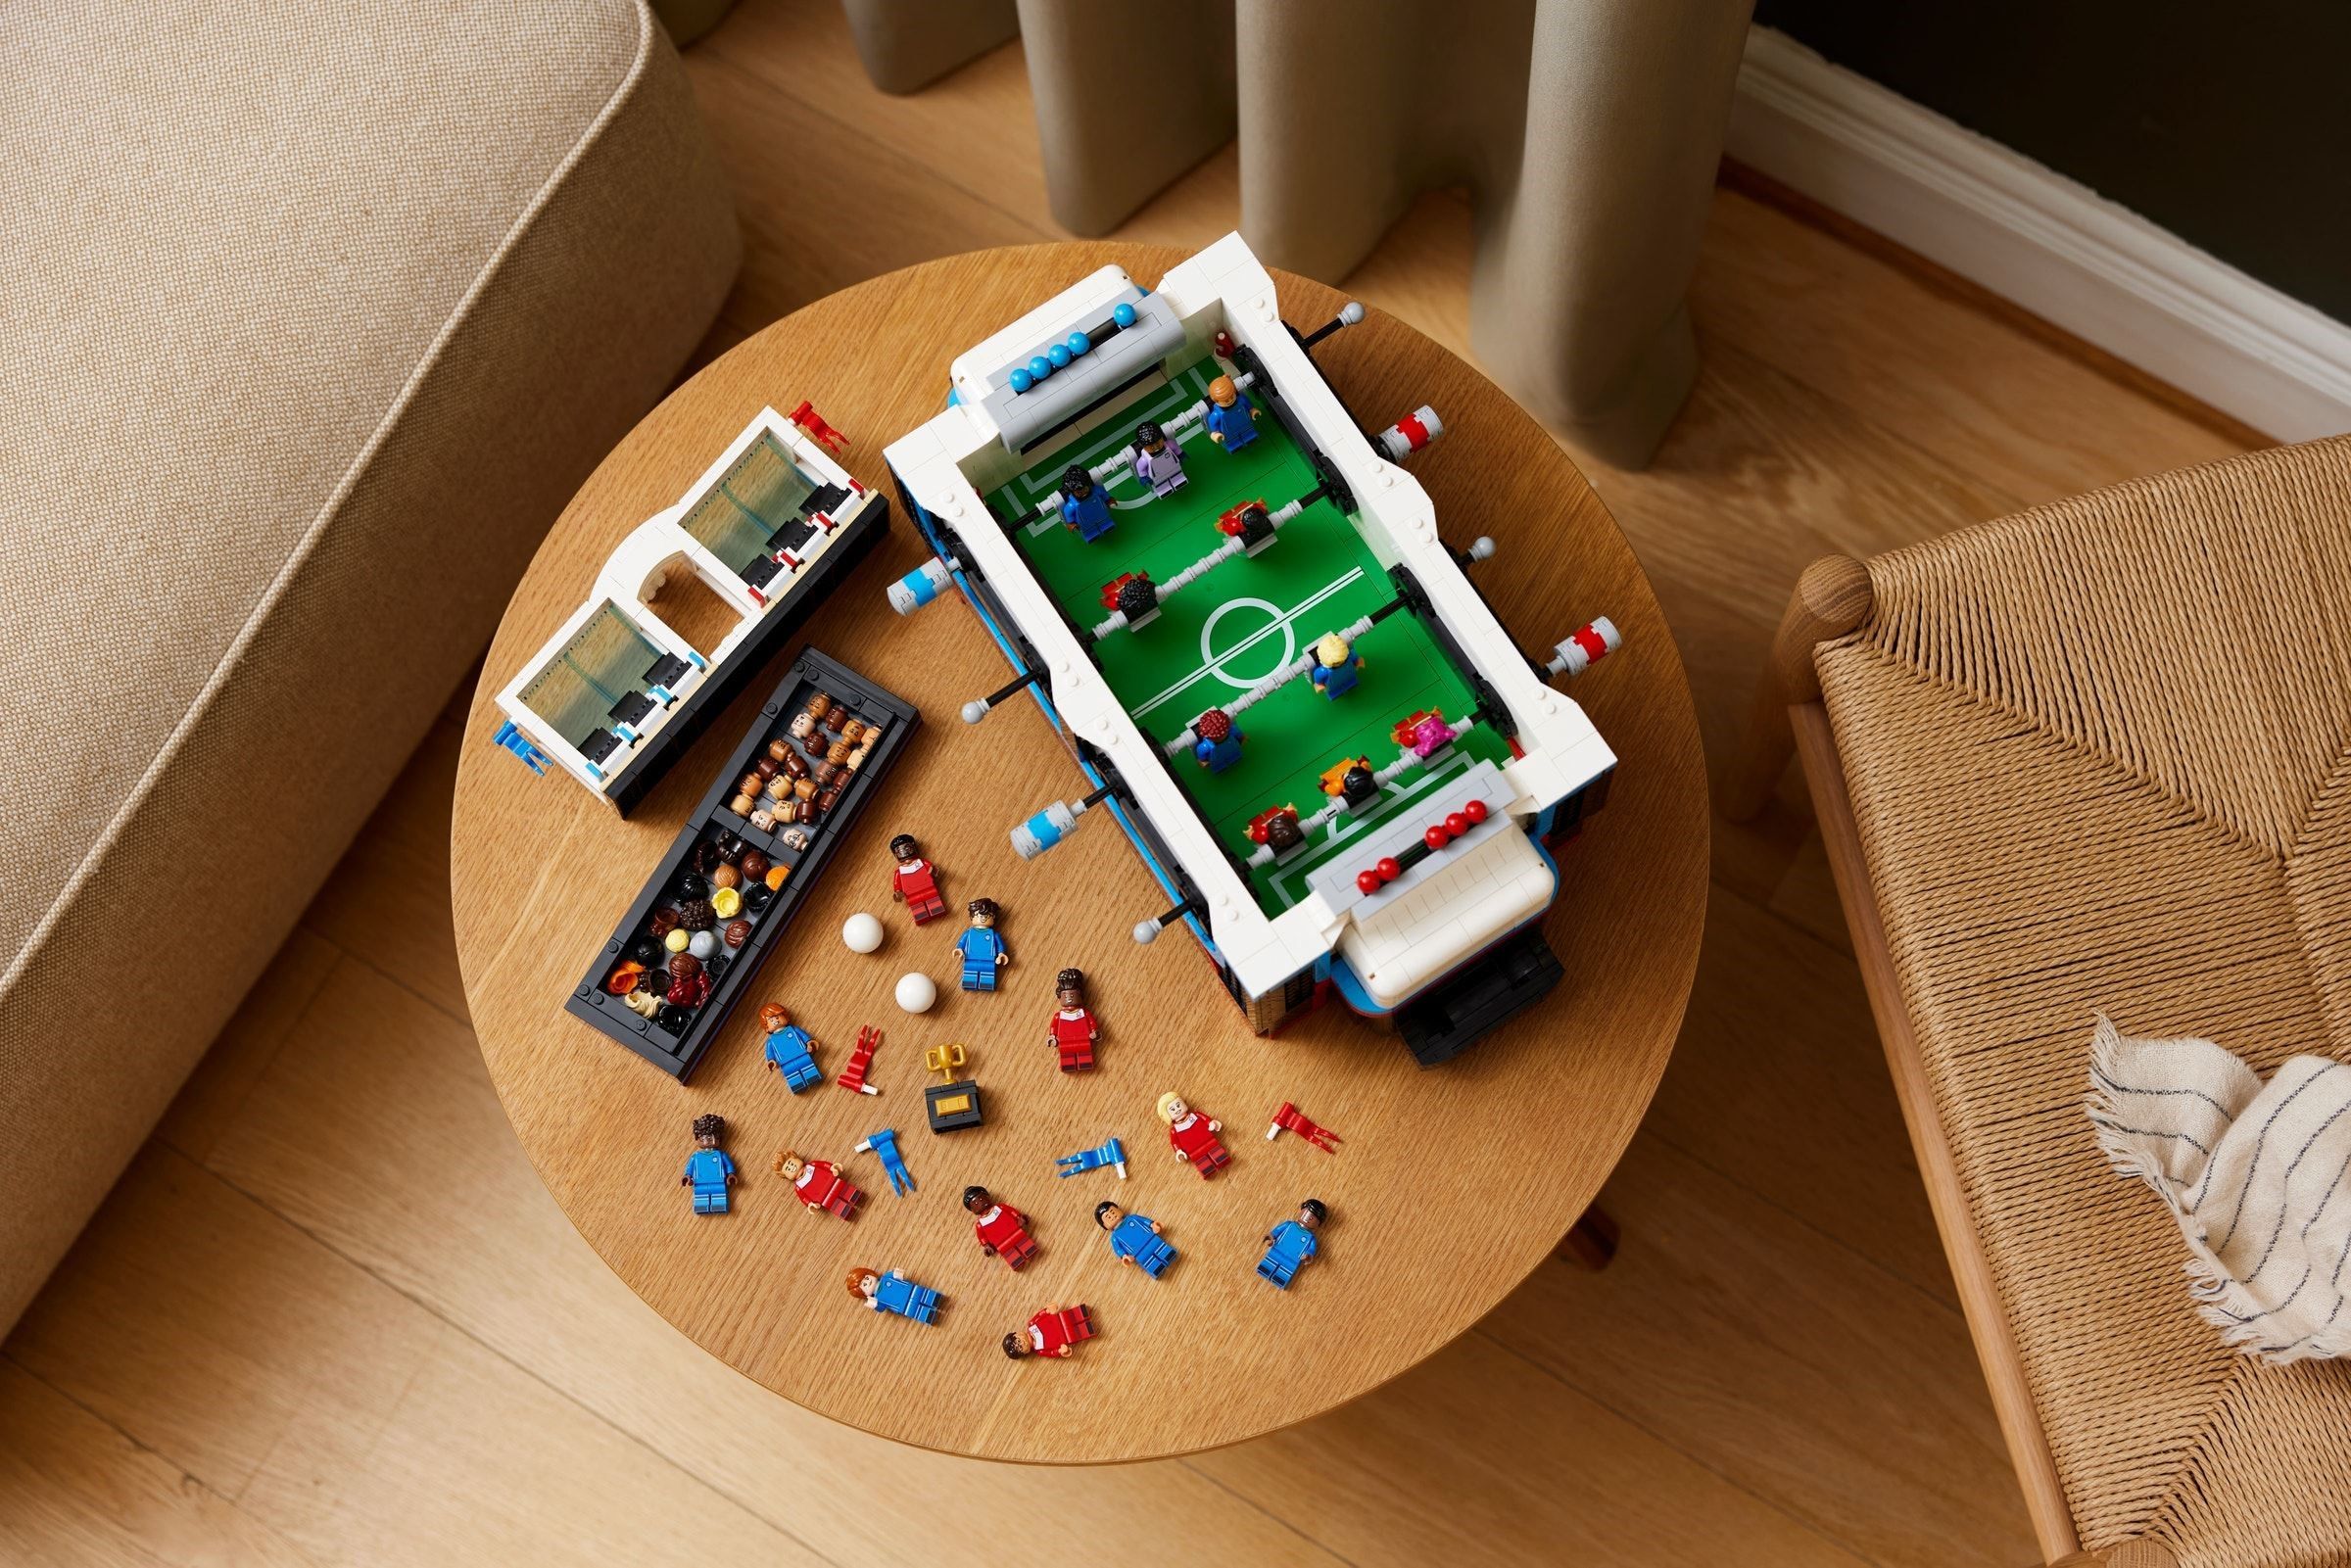 LEGO Ideas Table Football set